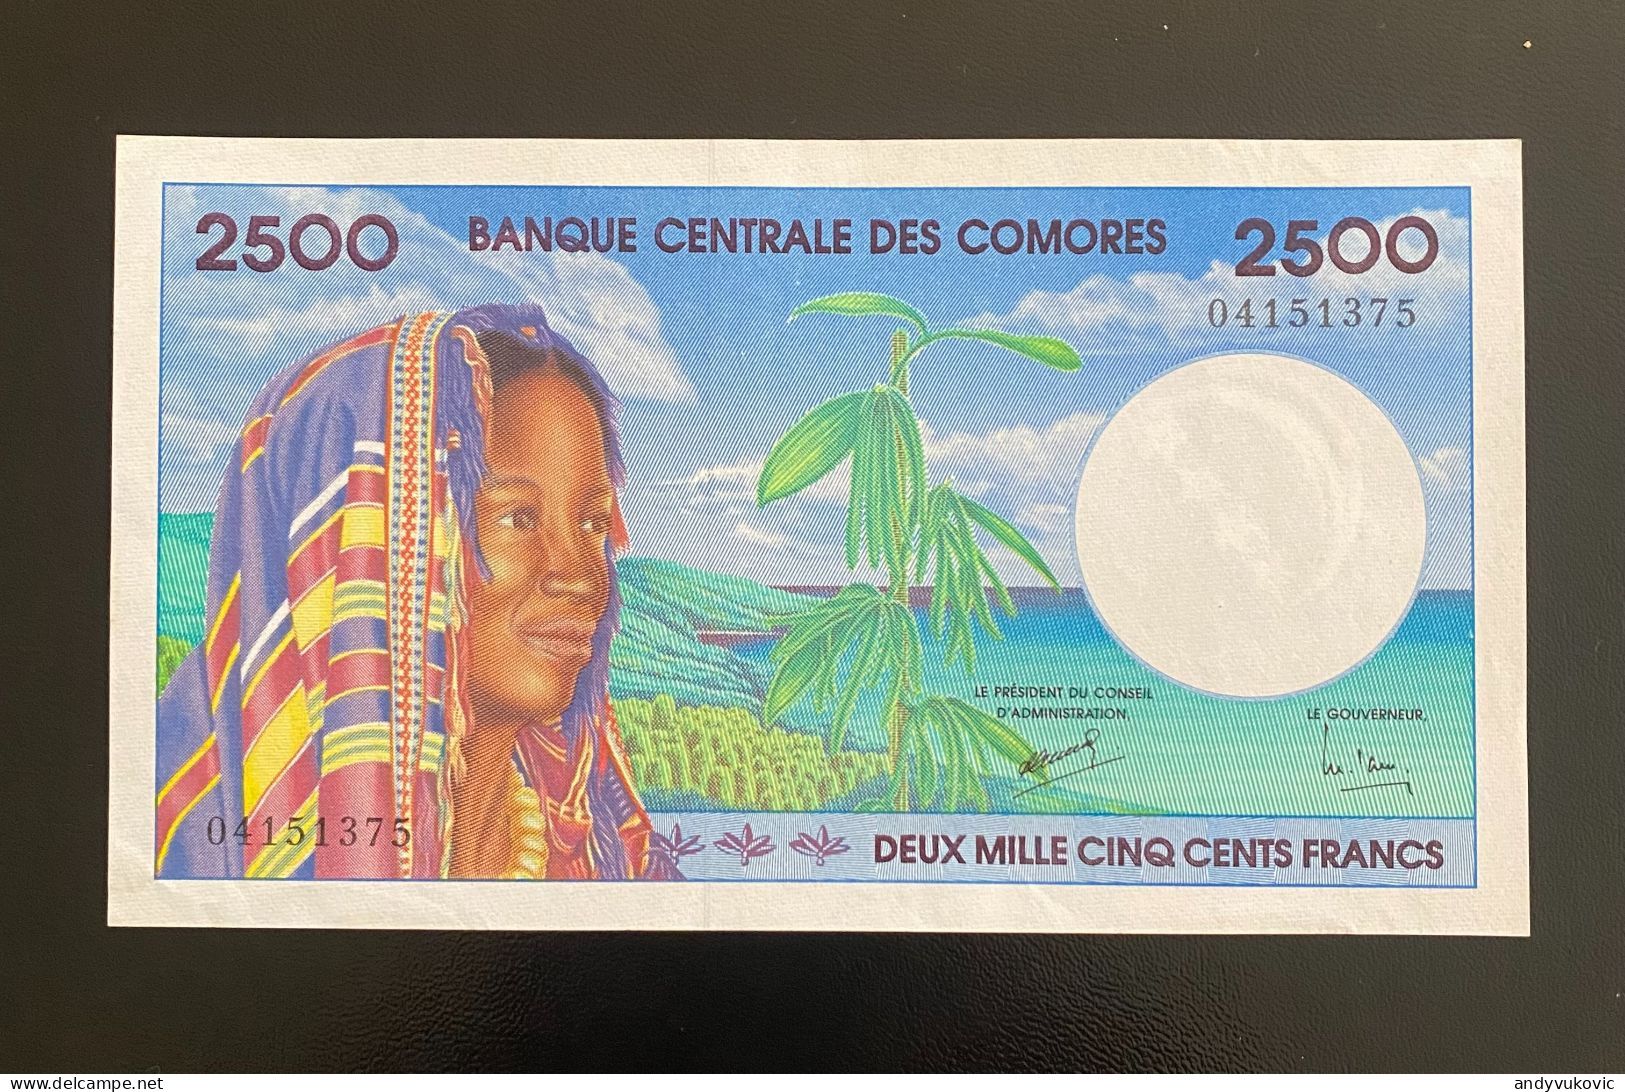 COMOROS 2500 FRANCS, UNC, P13 - Comores